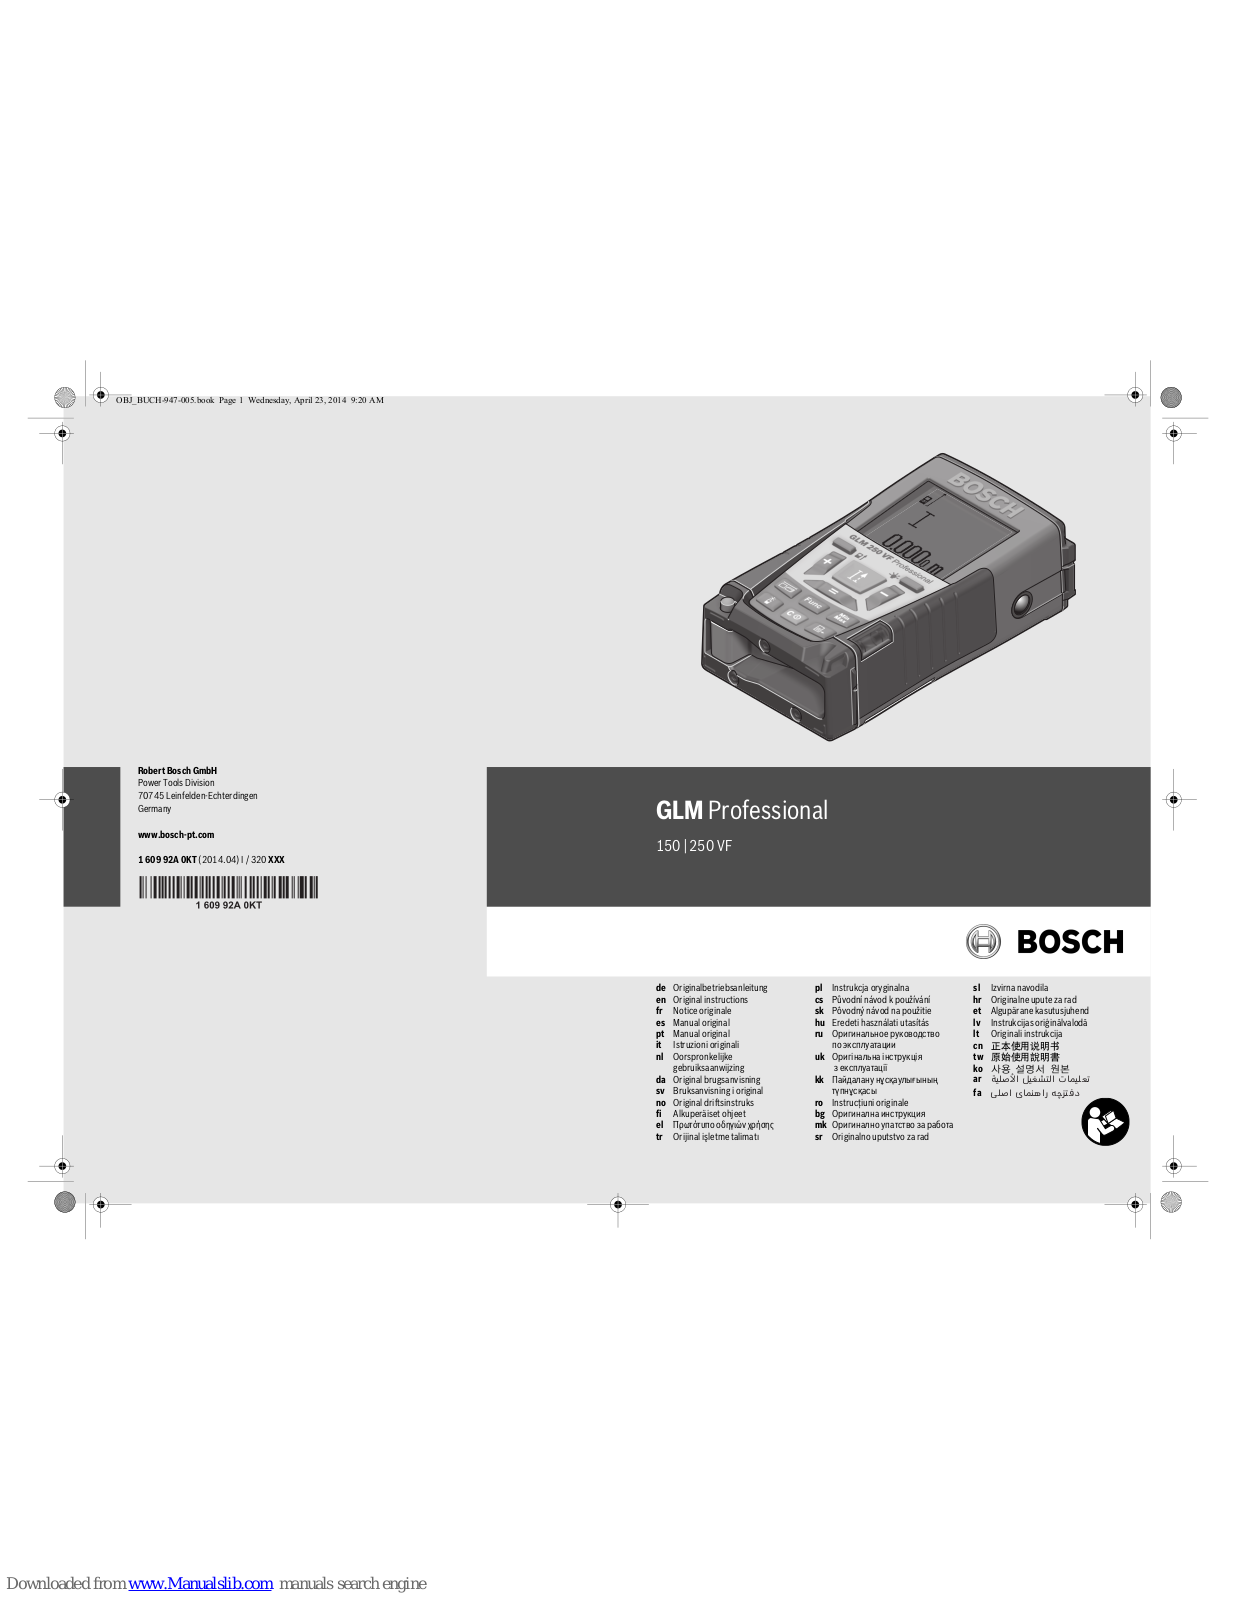 Bosch GLM 250 VF Professional, GLM 150 Professional Original Instructions Manual